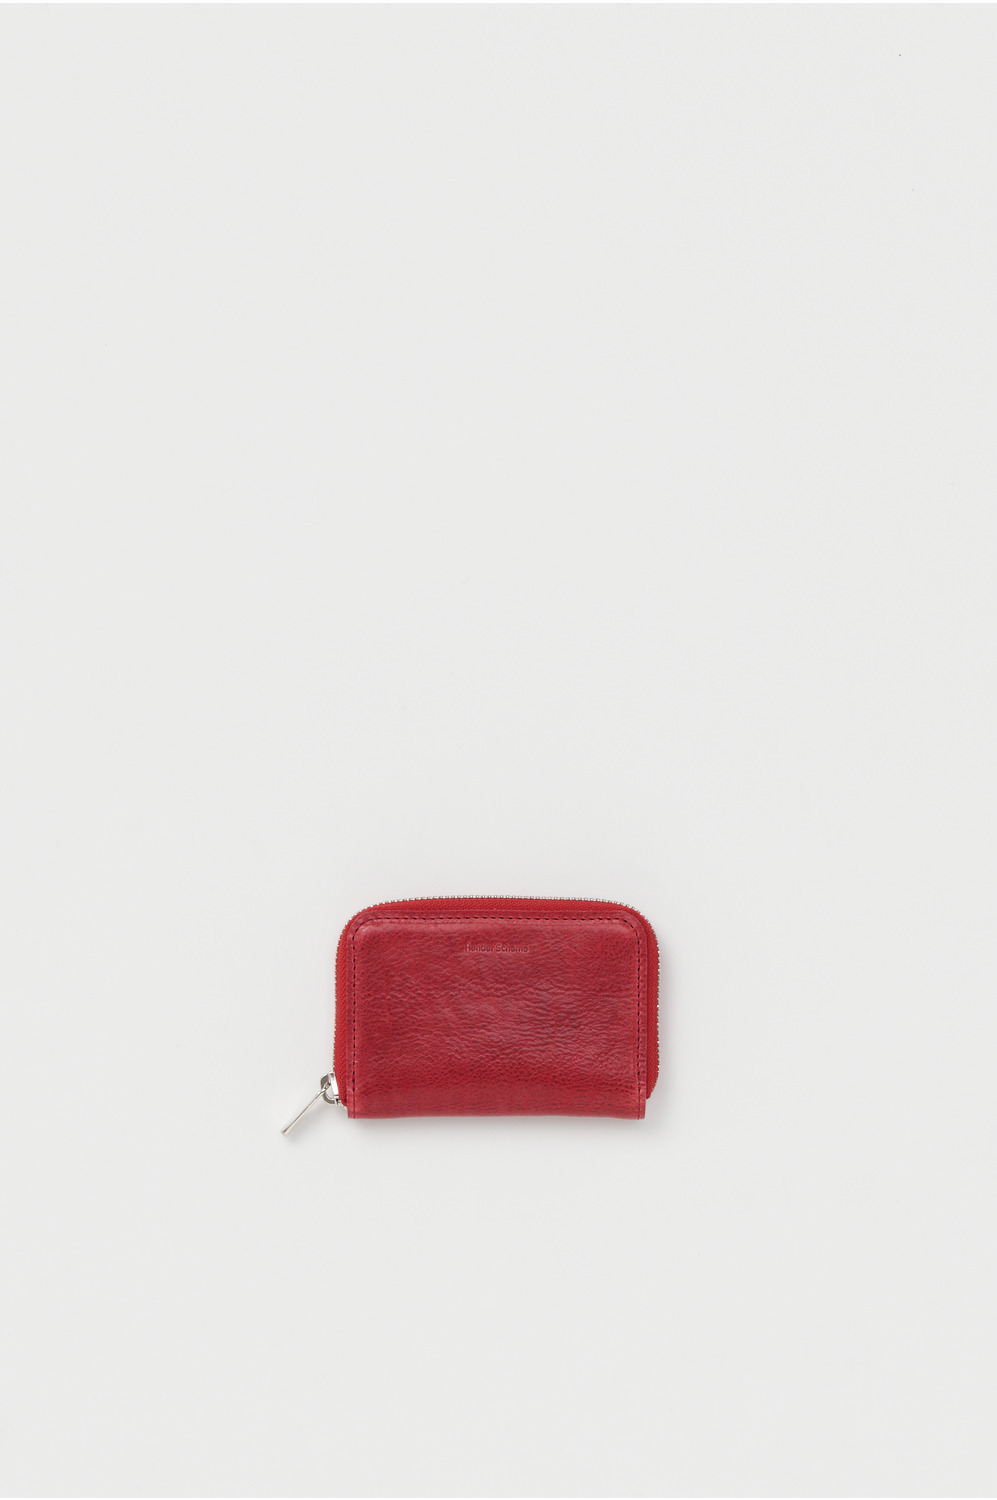 zip key purse 詳細画像 red 1